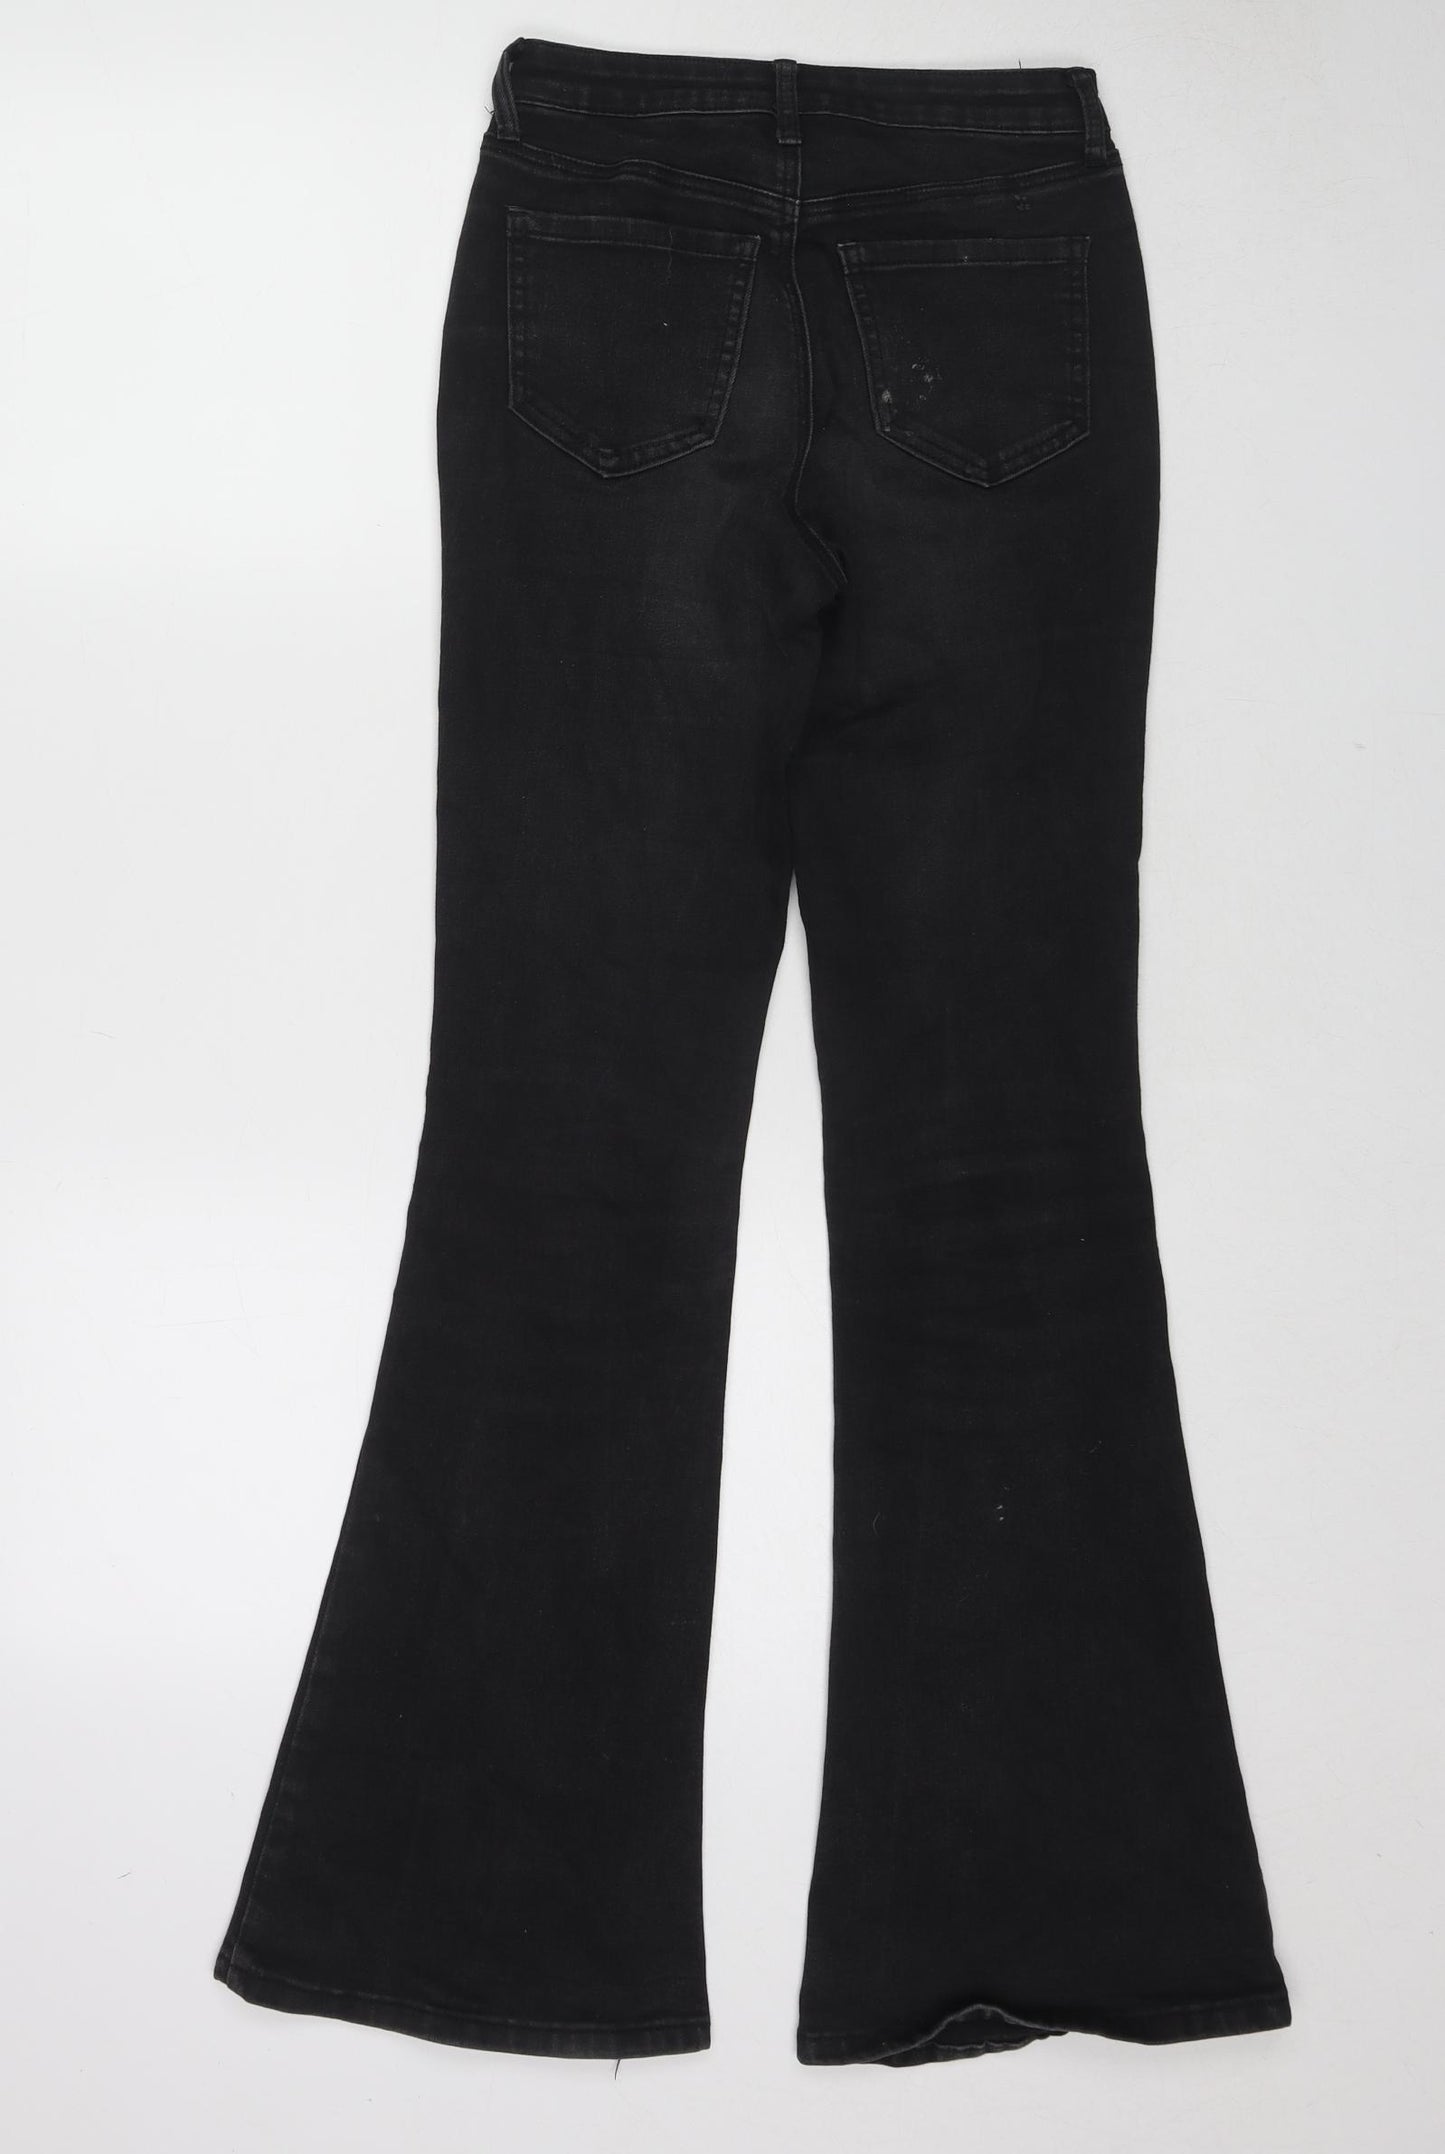 ABOUND Womens Black Cotton Flared Jeans Size 25 in L31 in Regular Zip